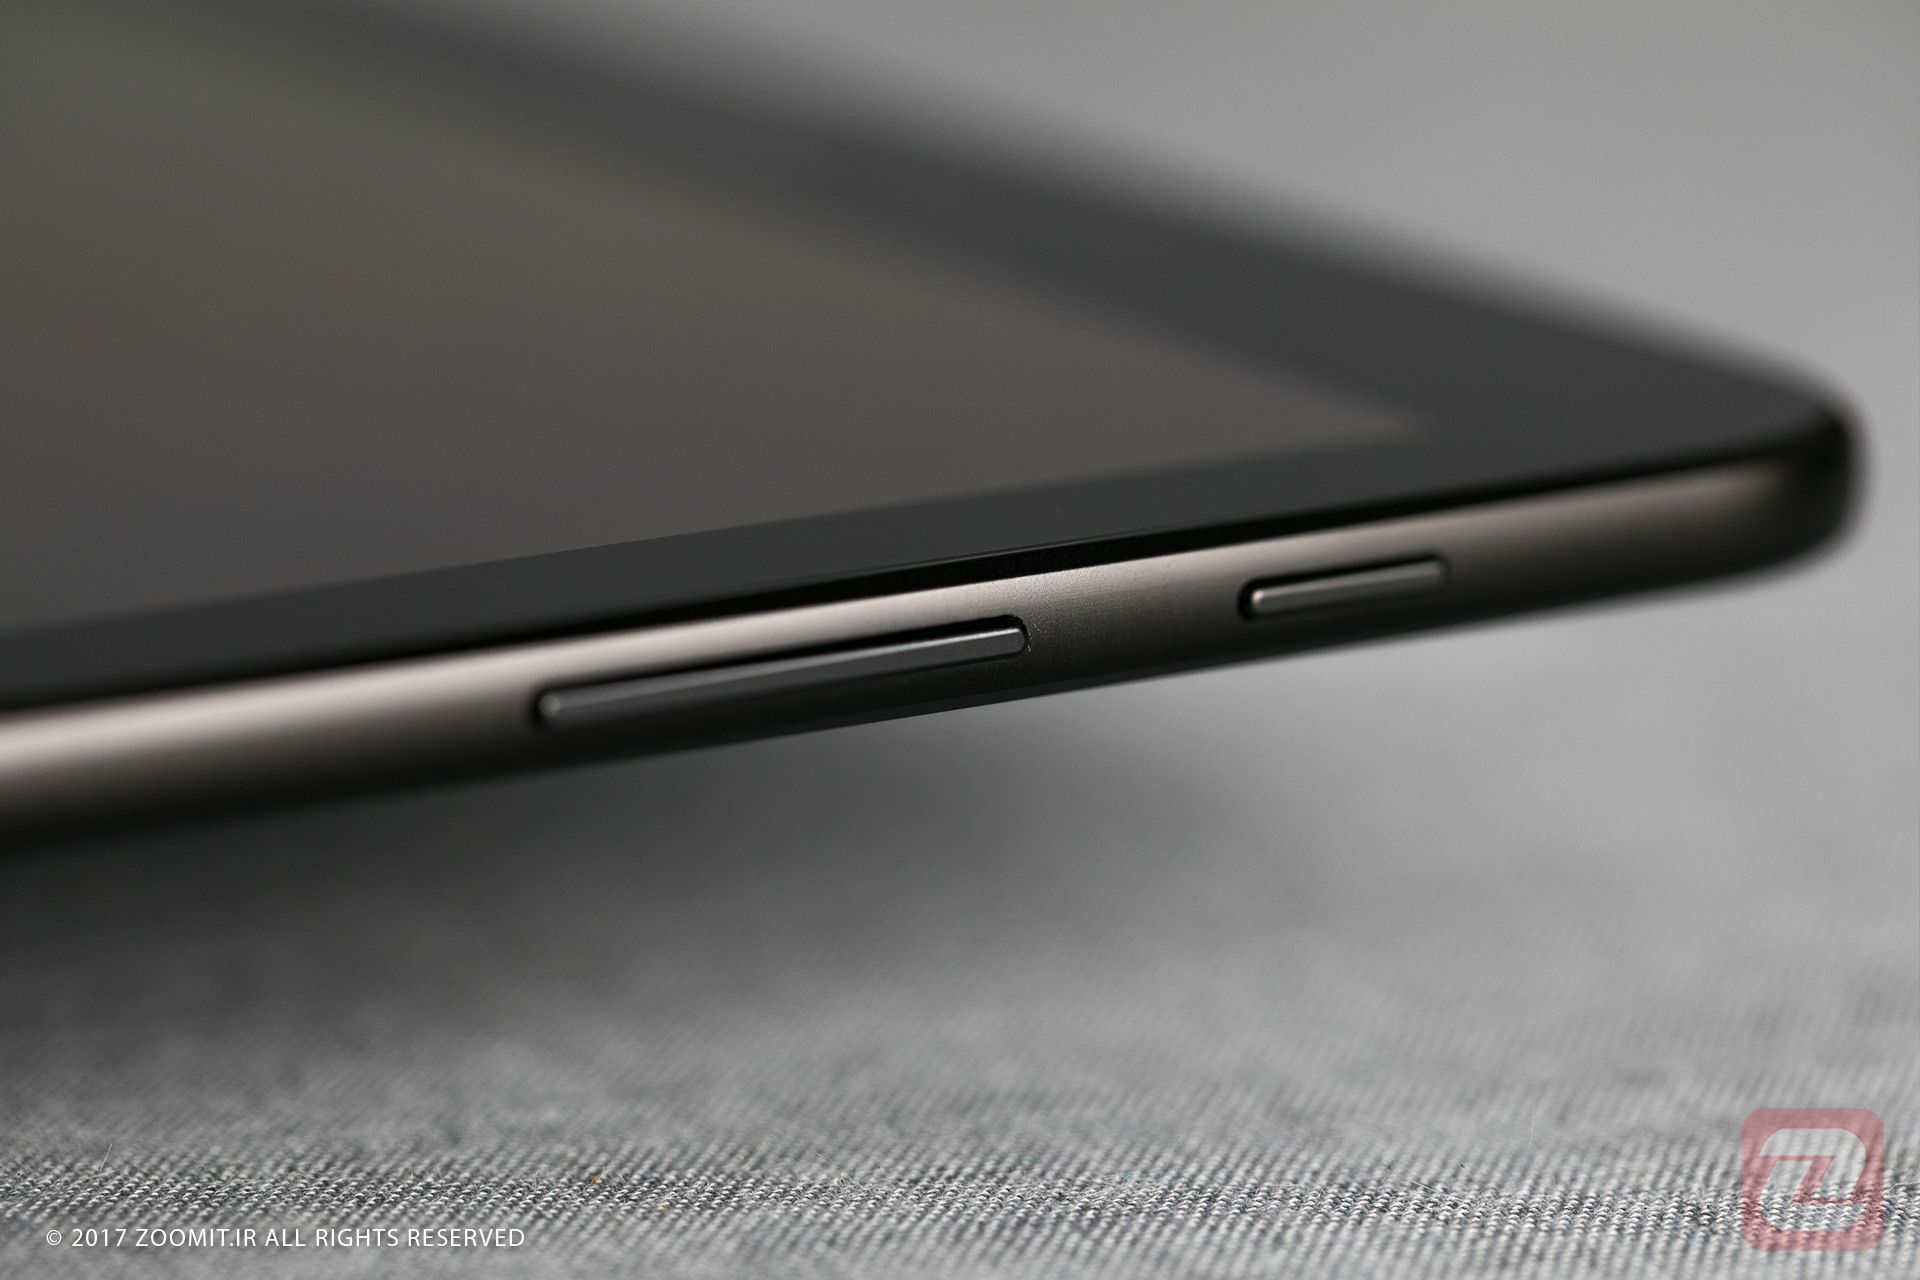 مرجع متخصصين ايران سامسونگ گلكسي تب اس 3 / Samsung Galaxy Tab S3